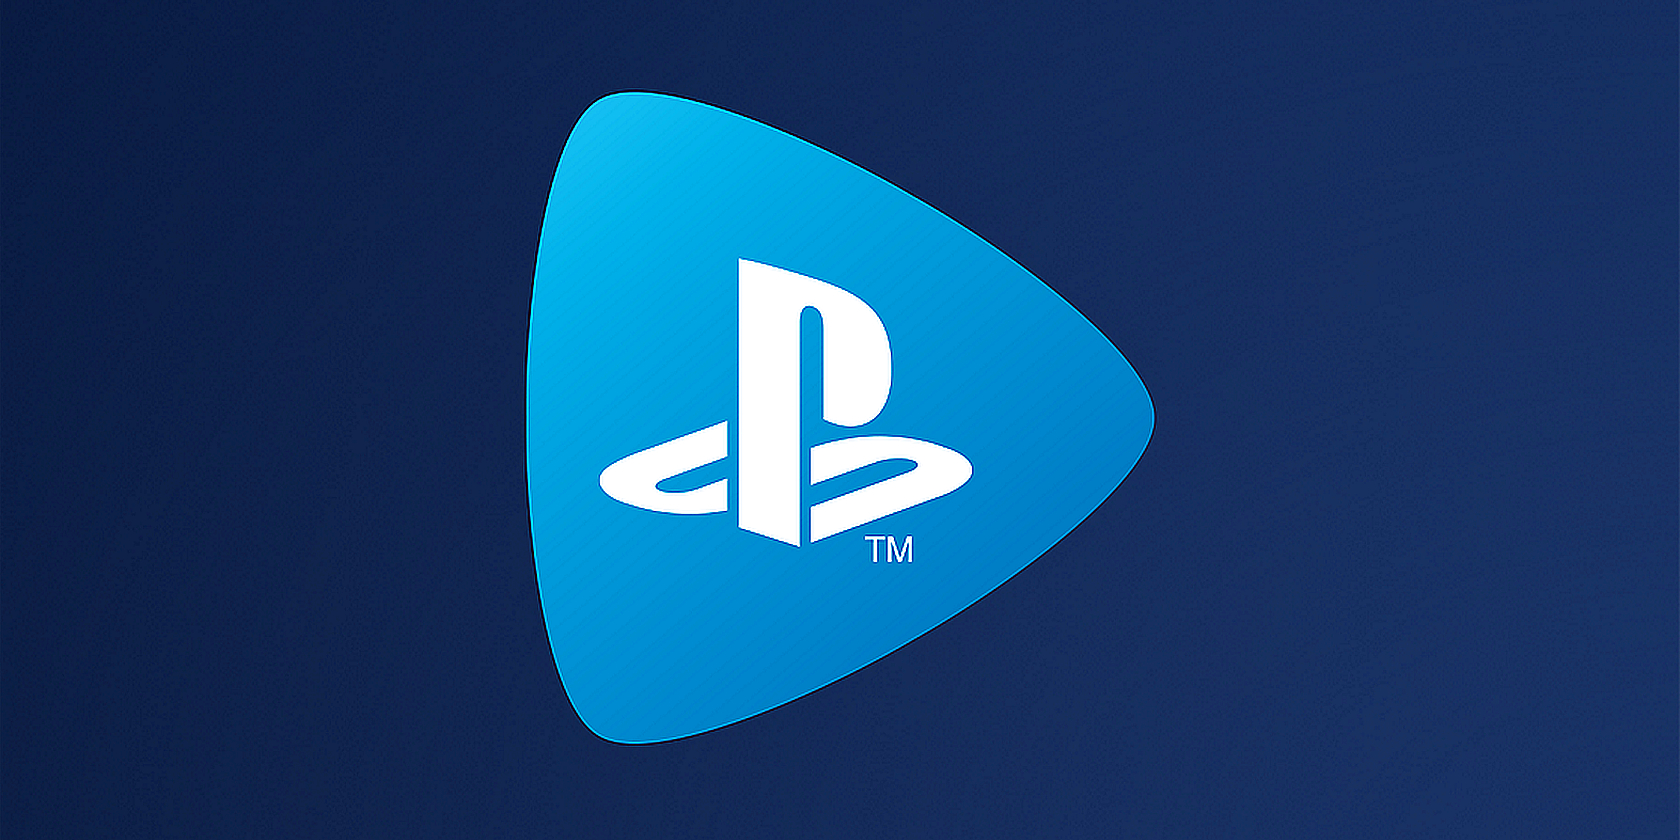 playstation now listing thumb 01 us 30sep19 - Sony: novità in arrivo su PlayStation Cloud Gaming